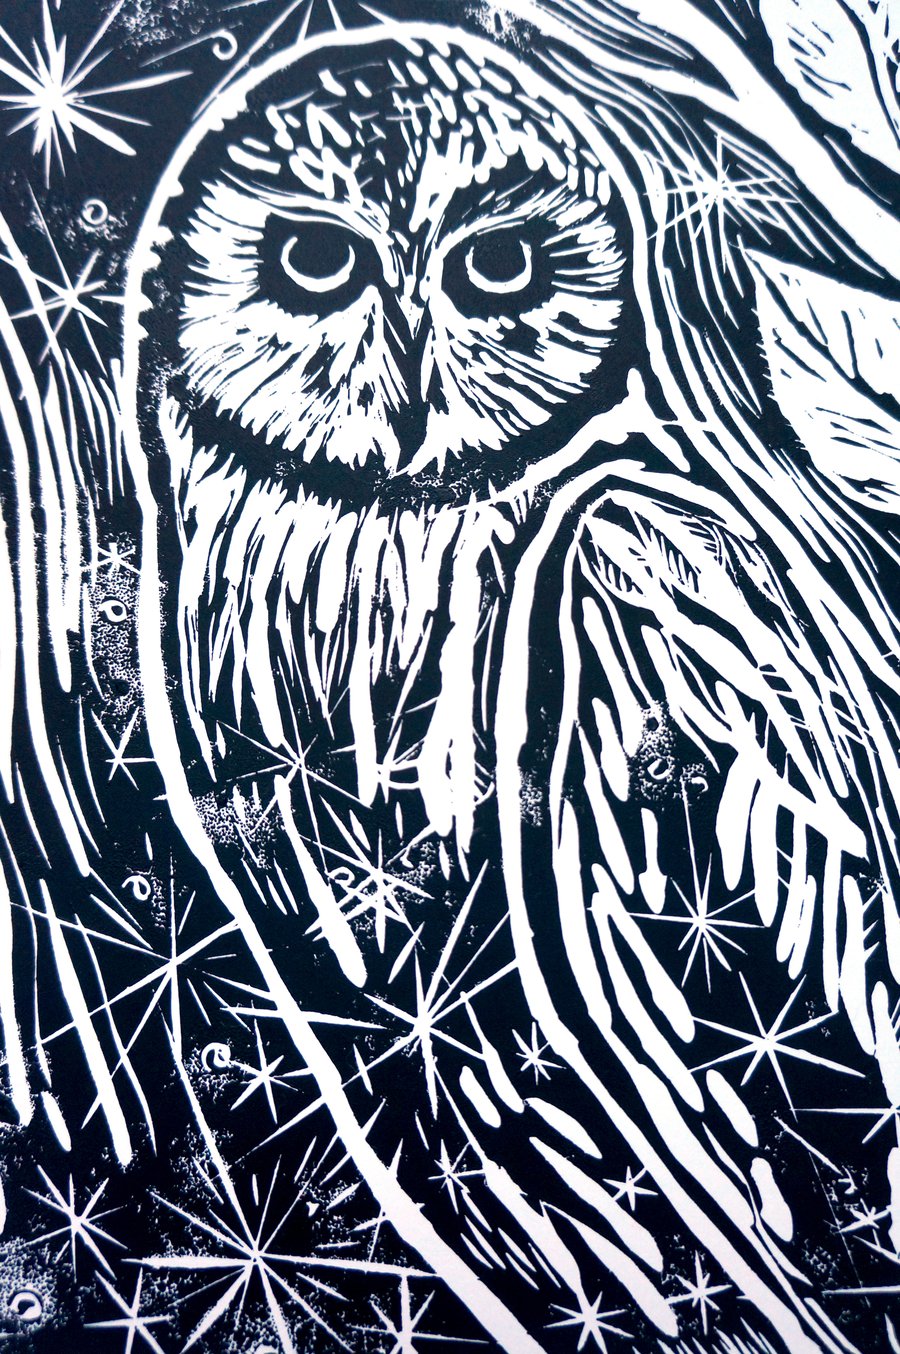 Owl With Stars, Linocut Print, A4 Print